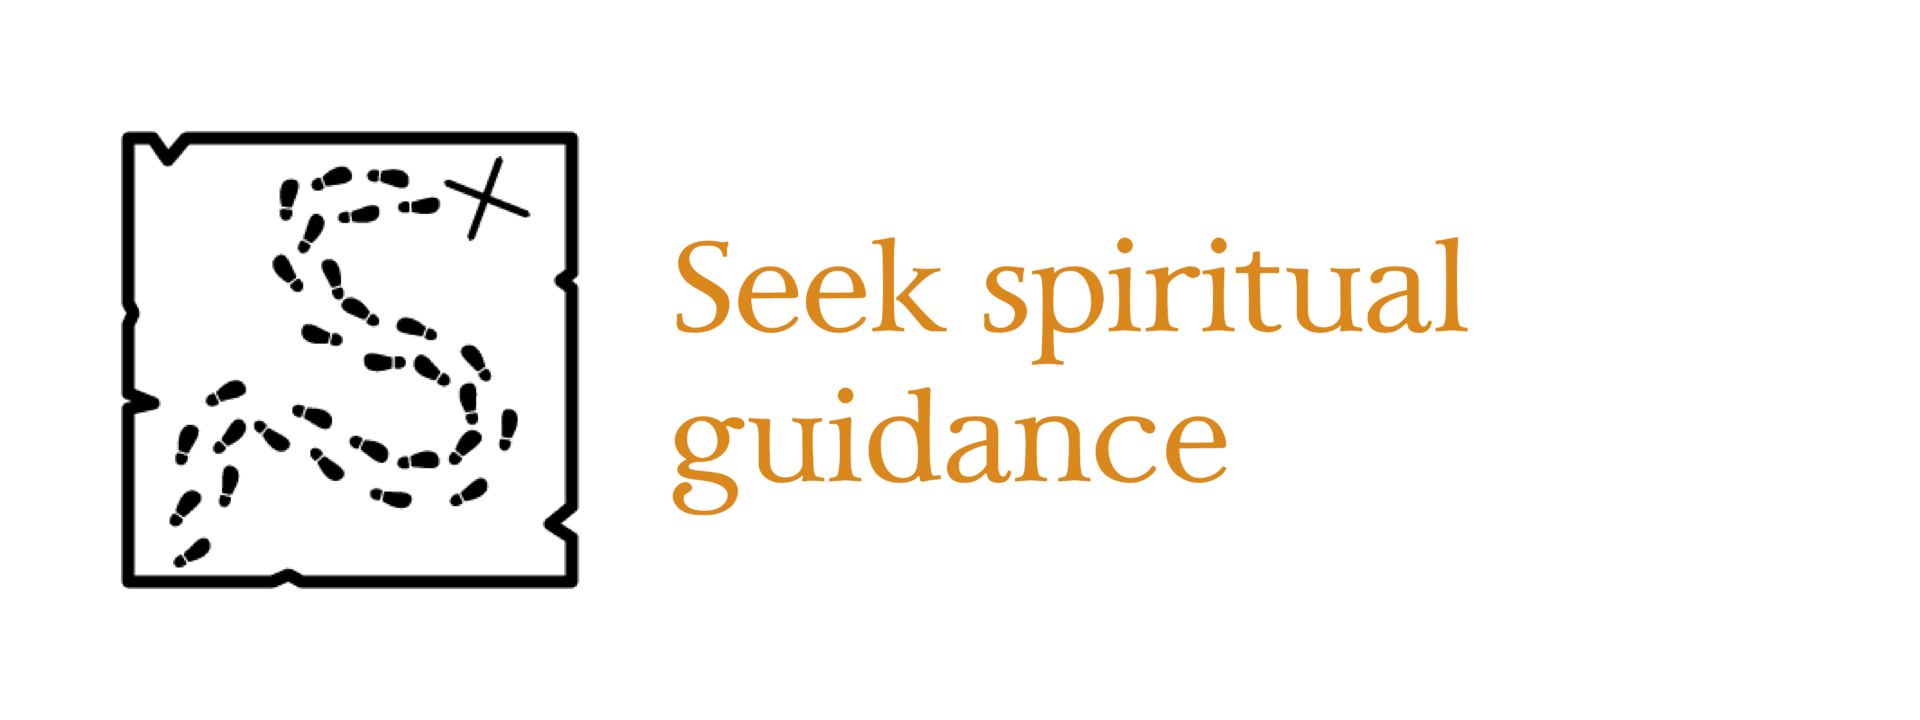 SeekSpiritualGuidance-01